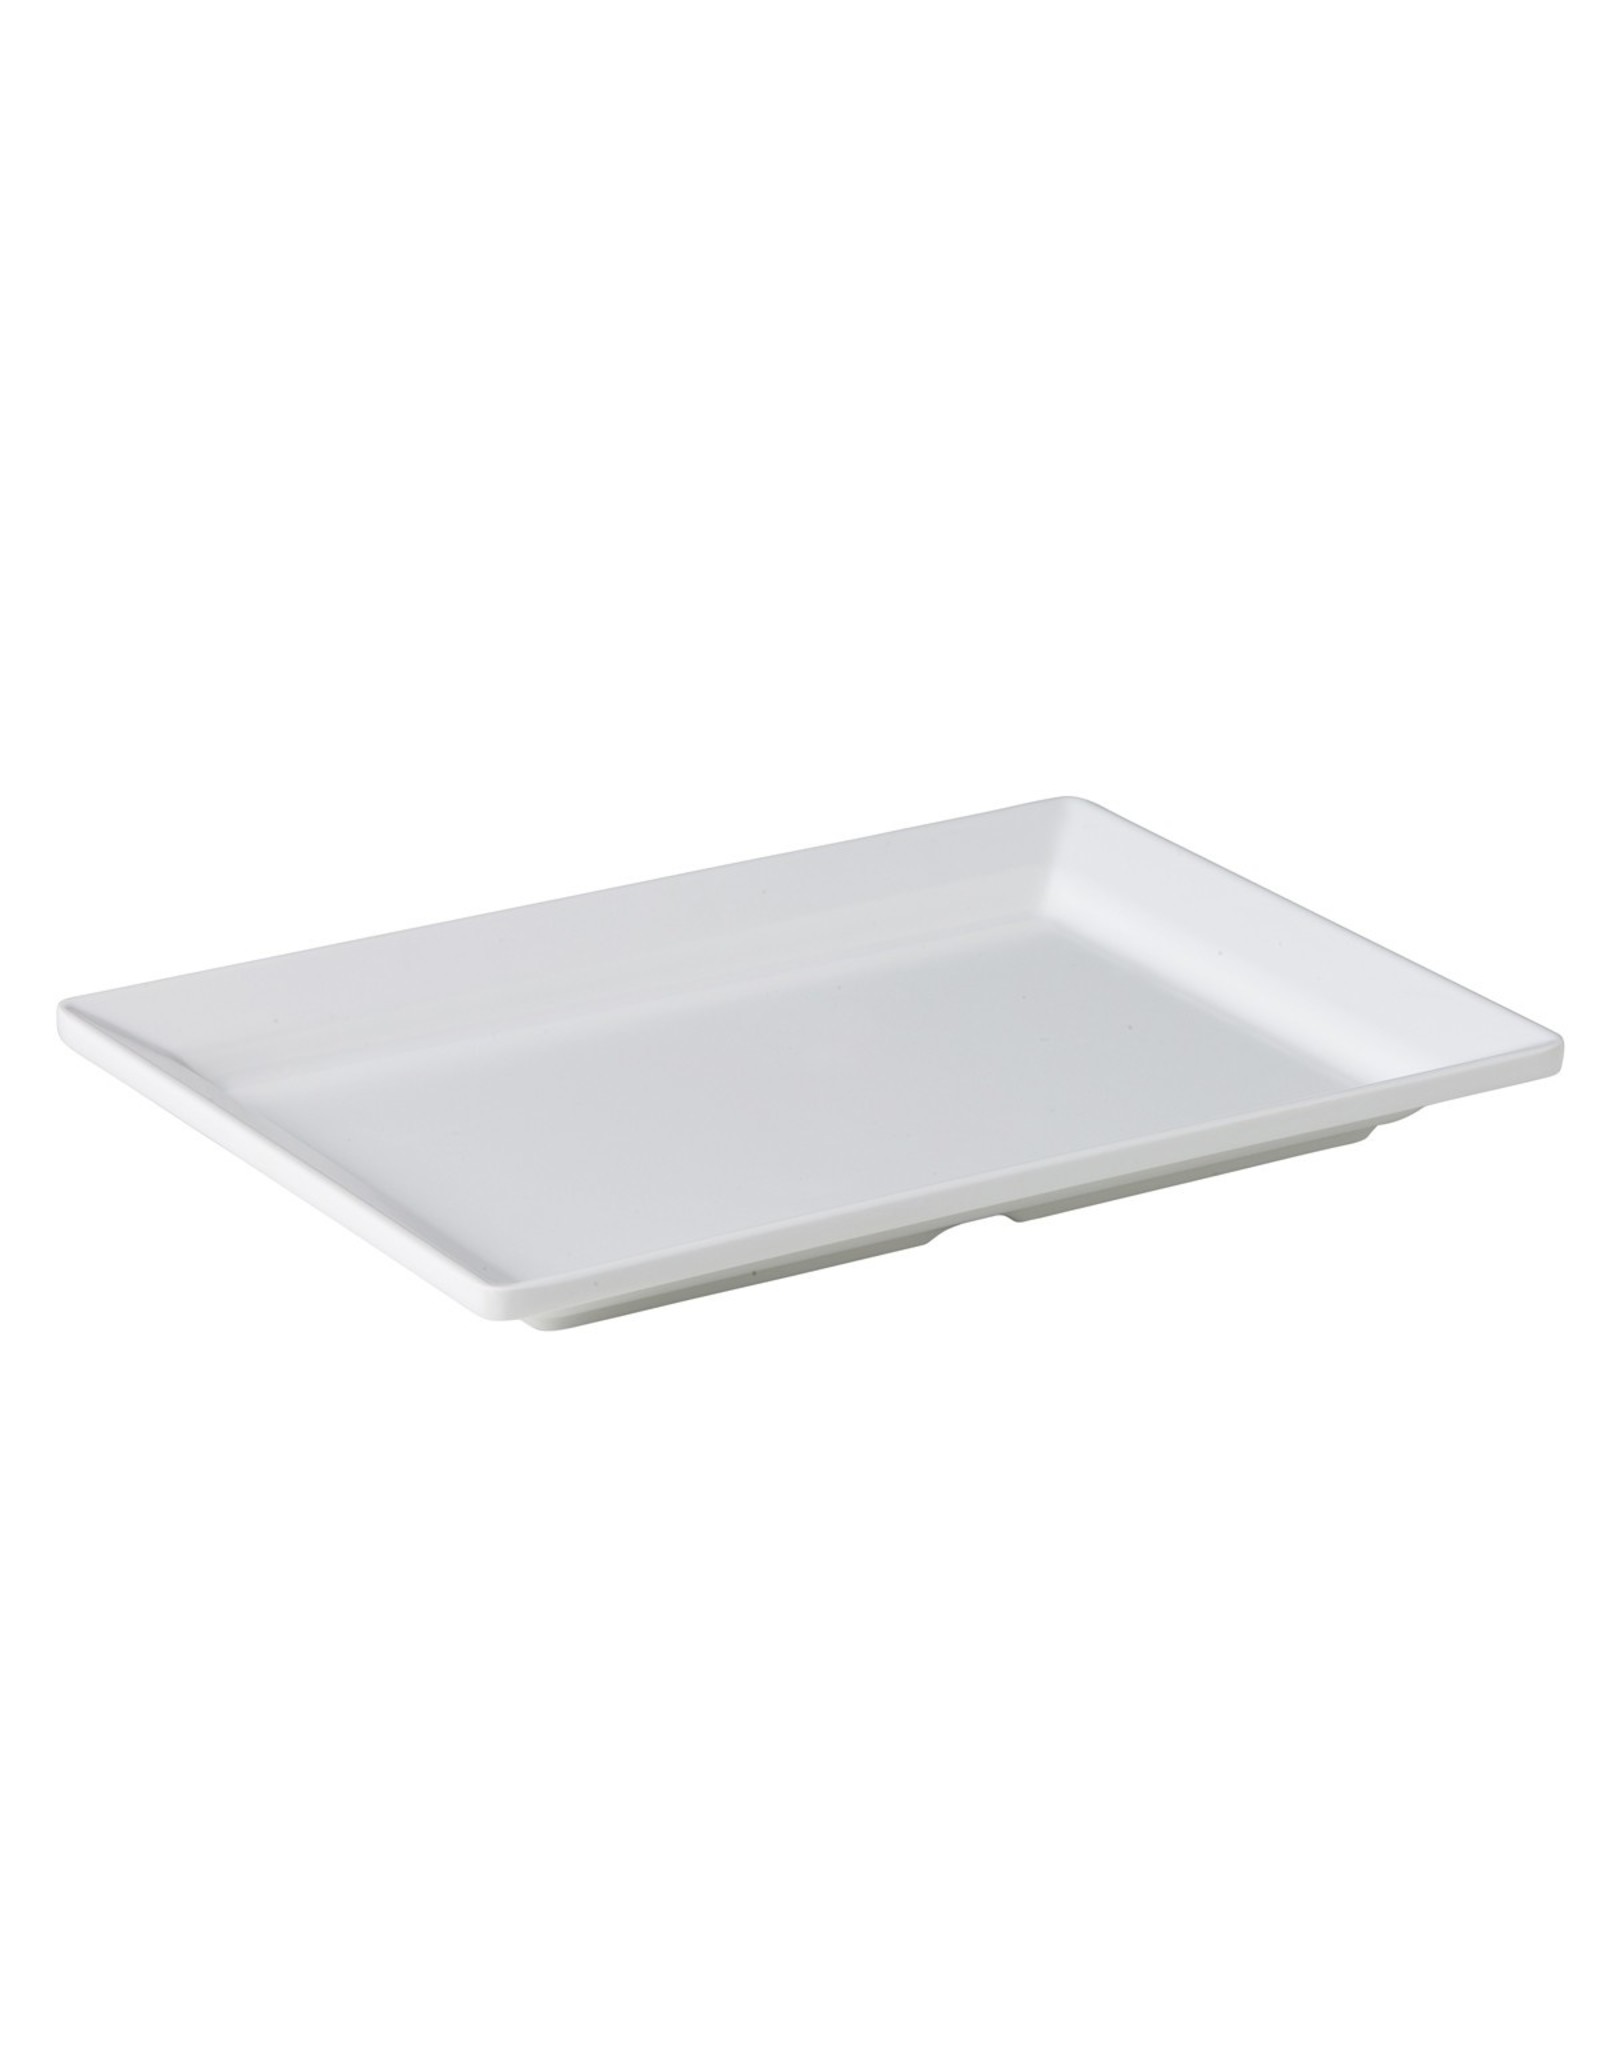 Stylepoint Rect. plate narrow edge white 31 x 30 x 3 cm